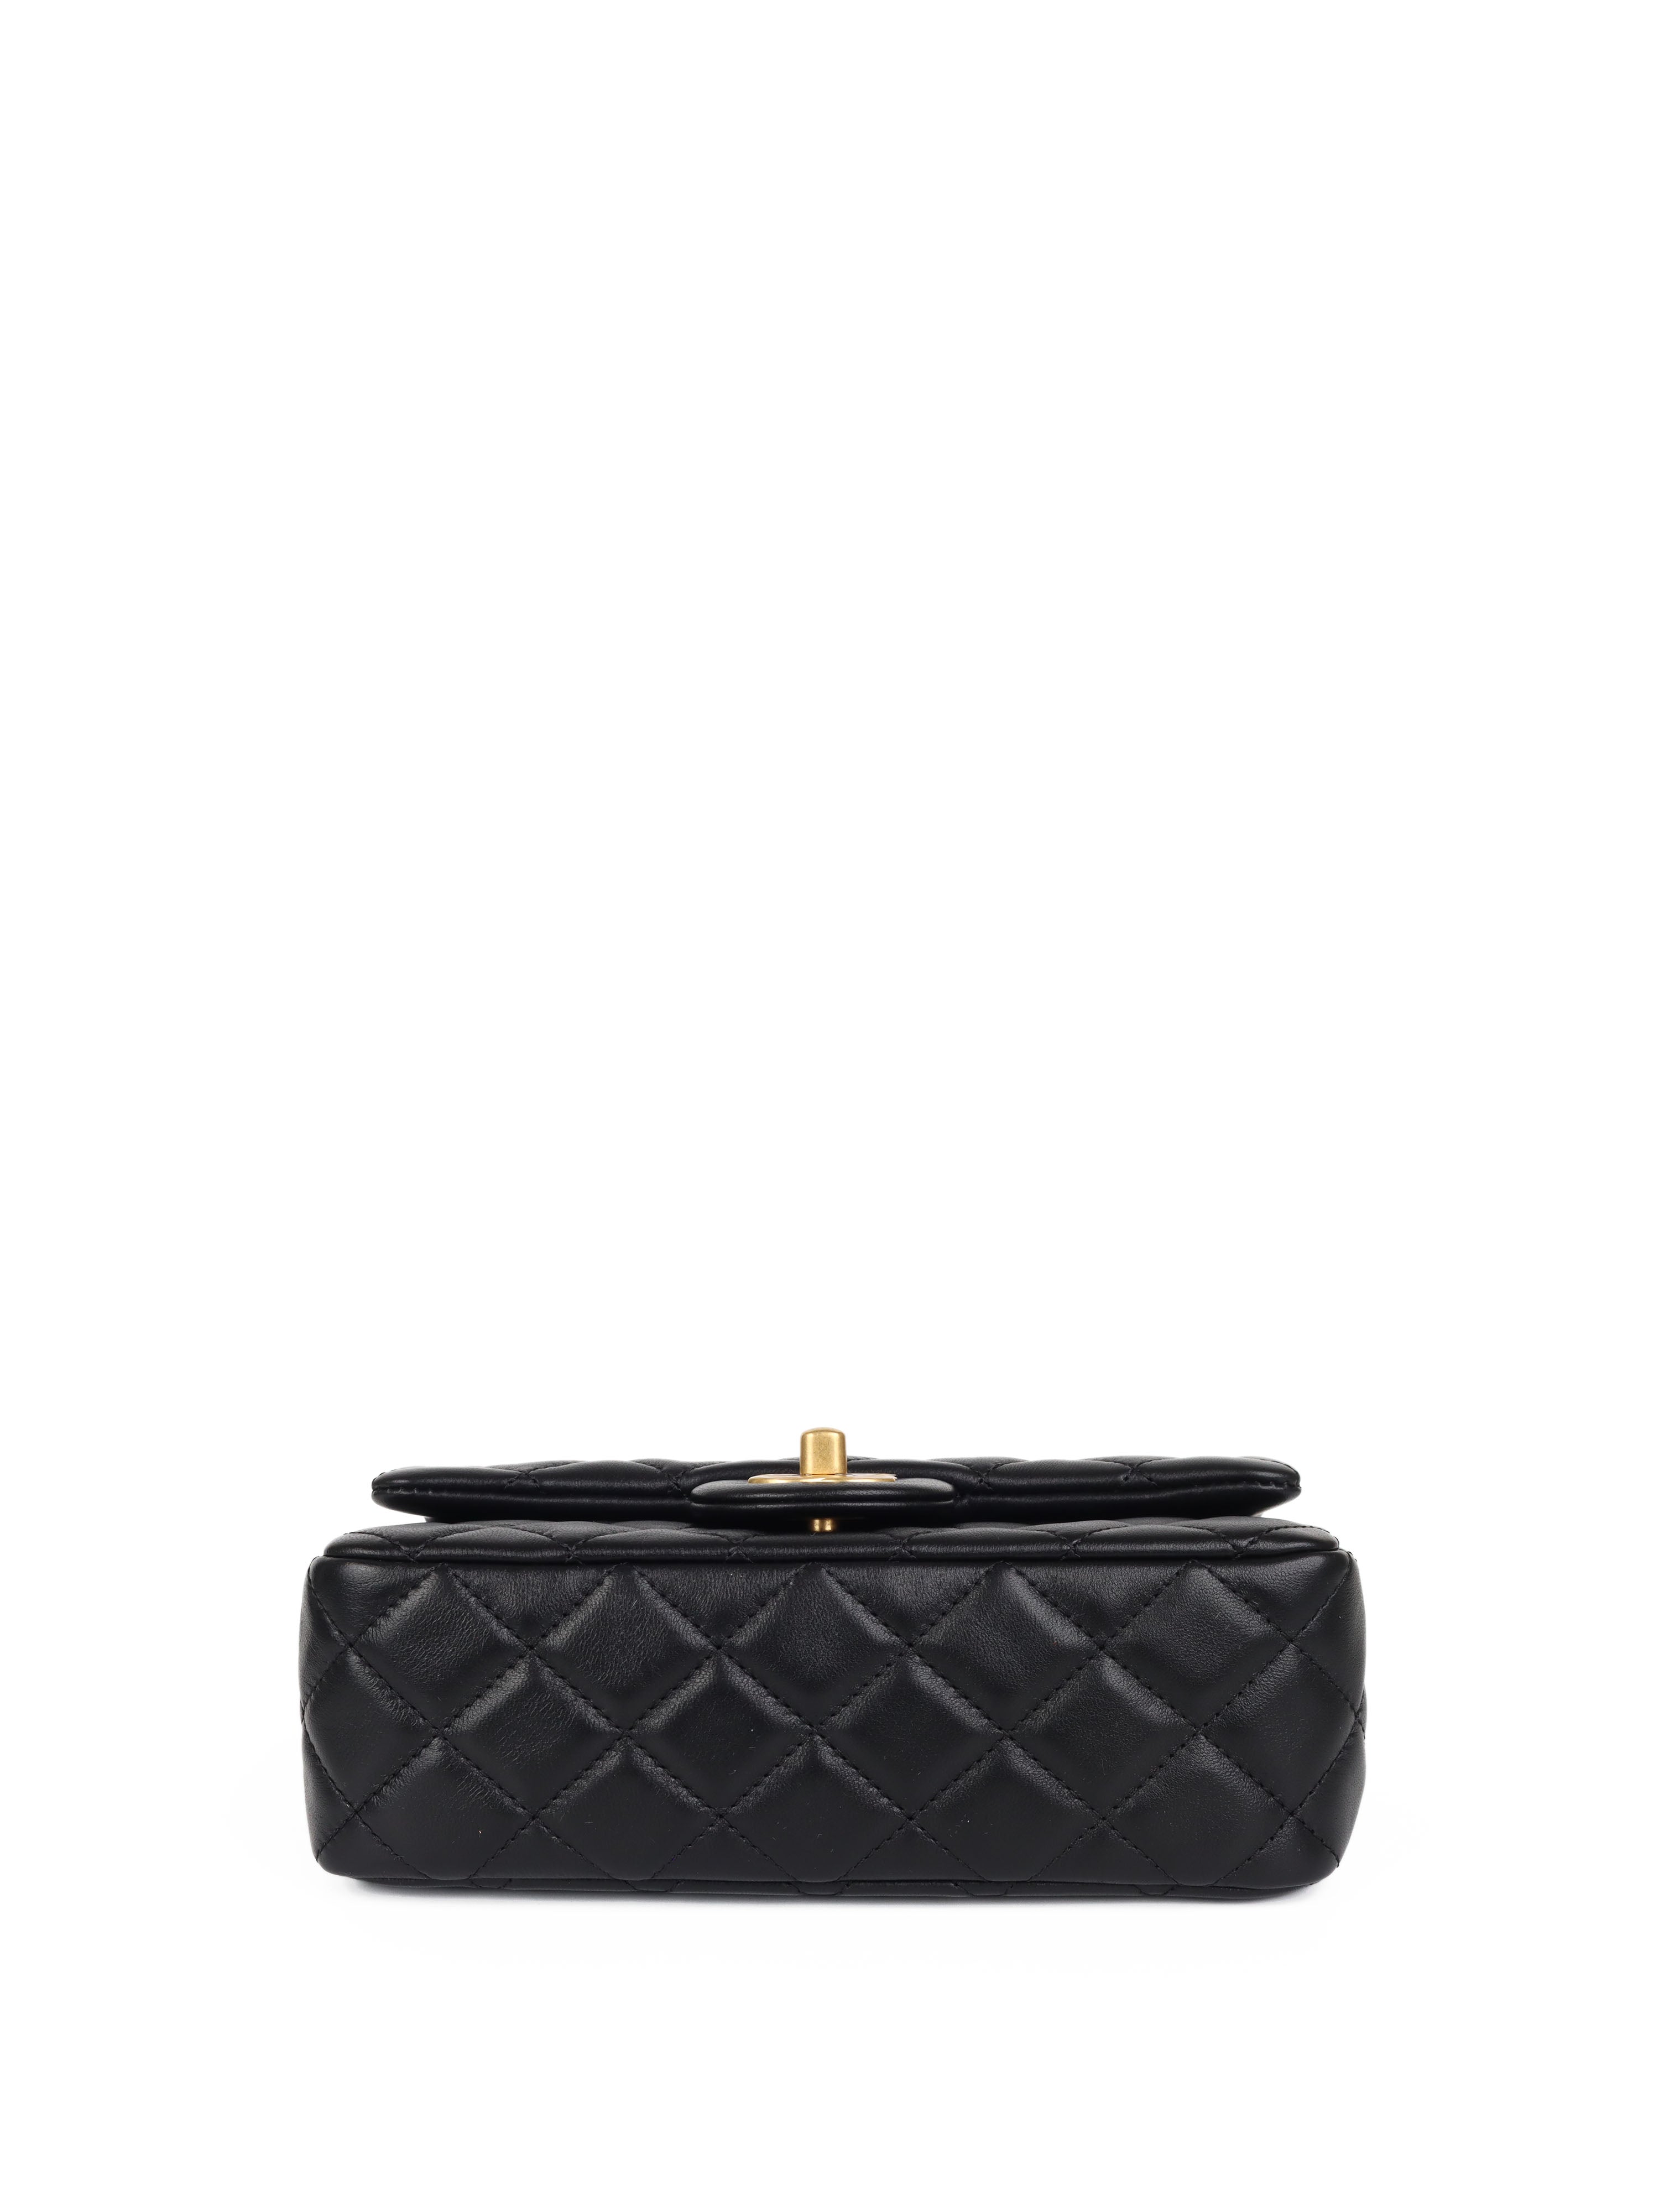 Chanel Black Mini Classic Flap Bag with Pearl Crush